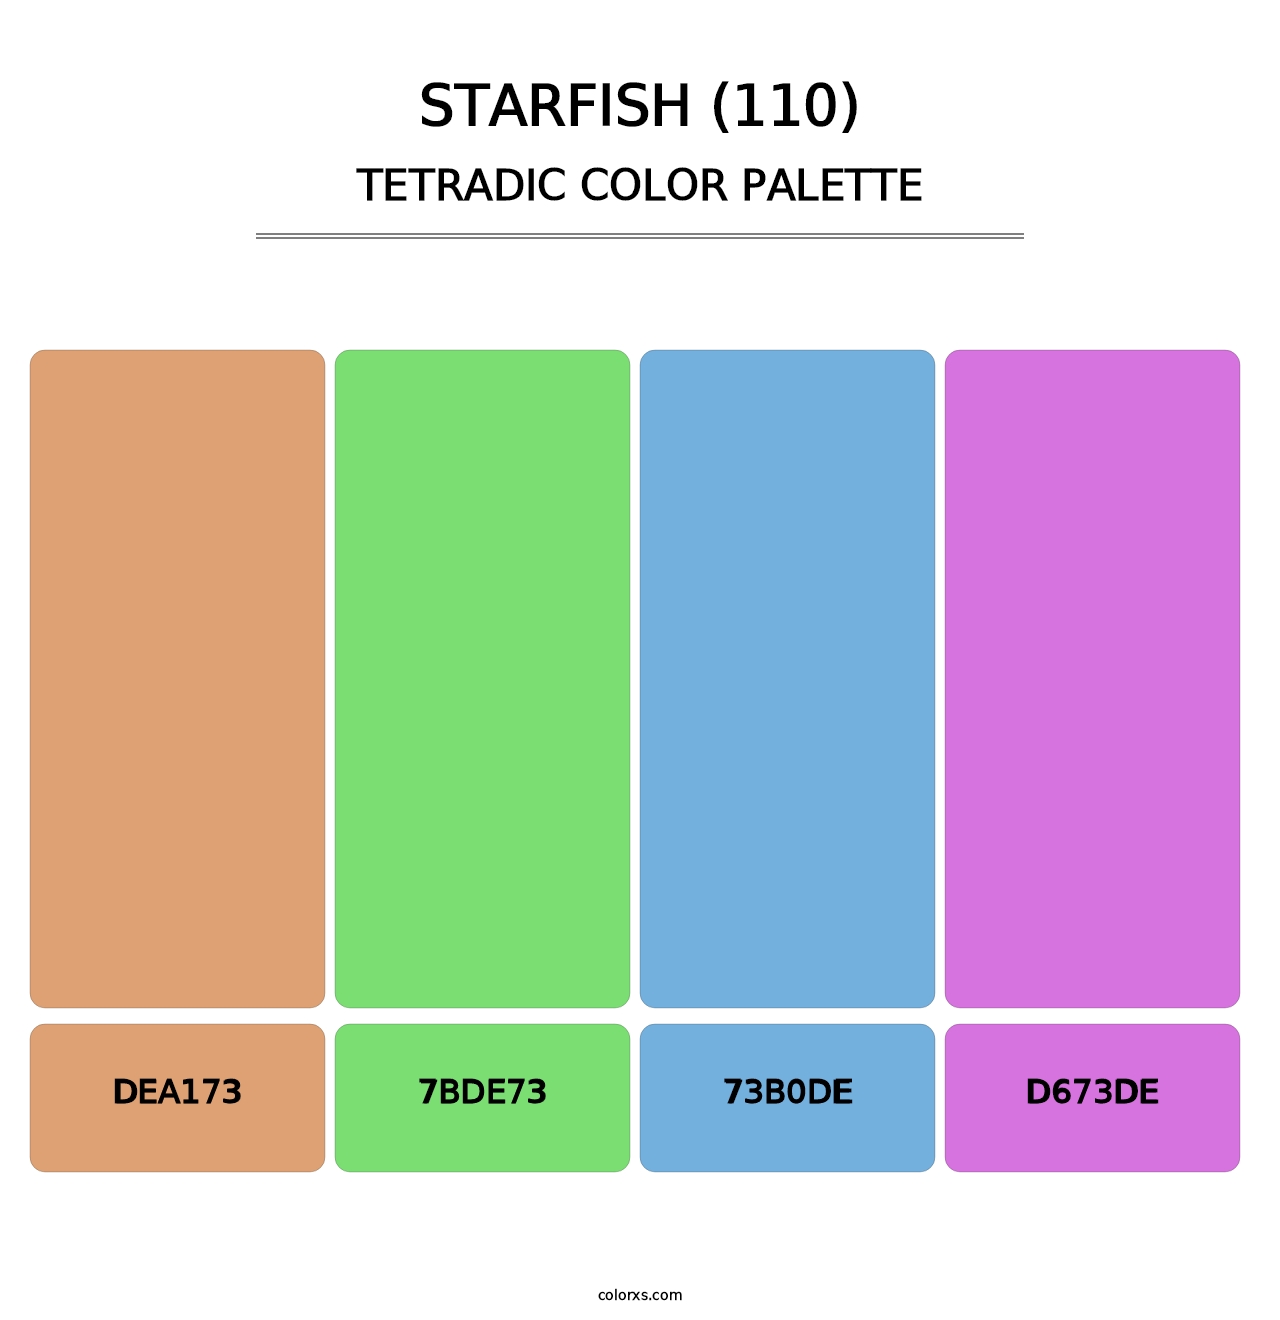 Starfish (110) - Tetradic Color Palette